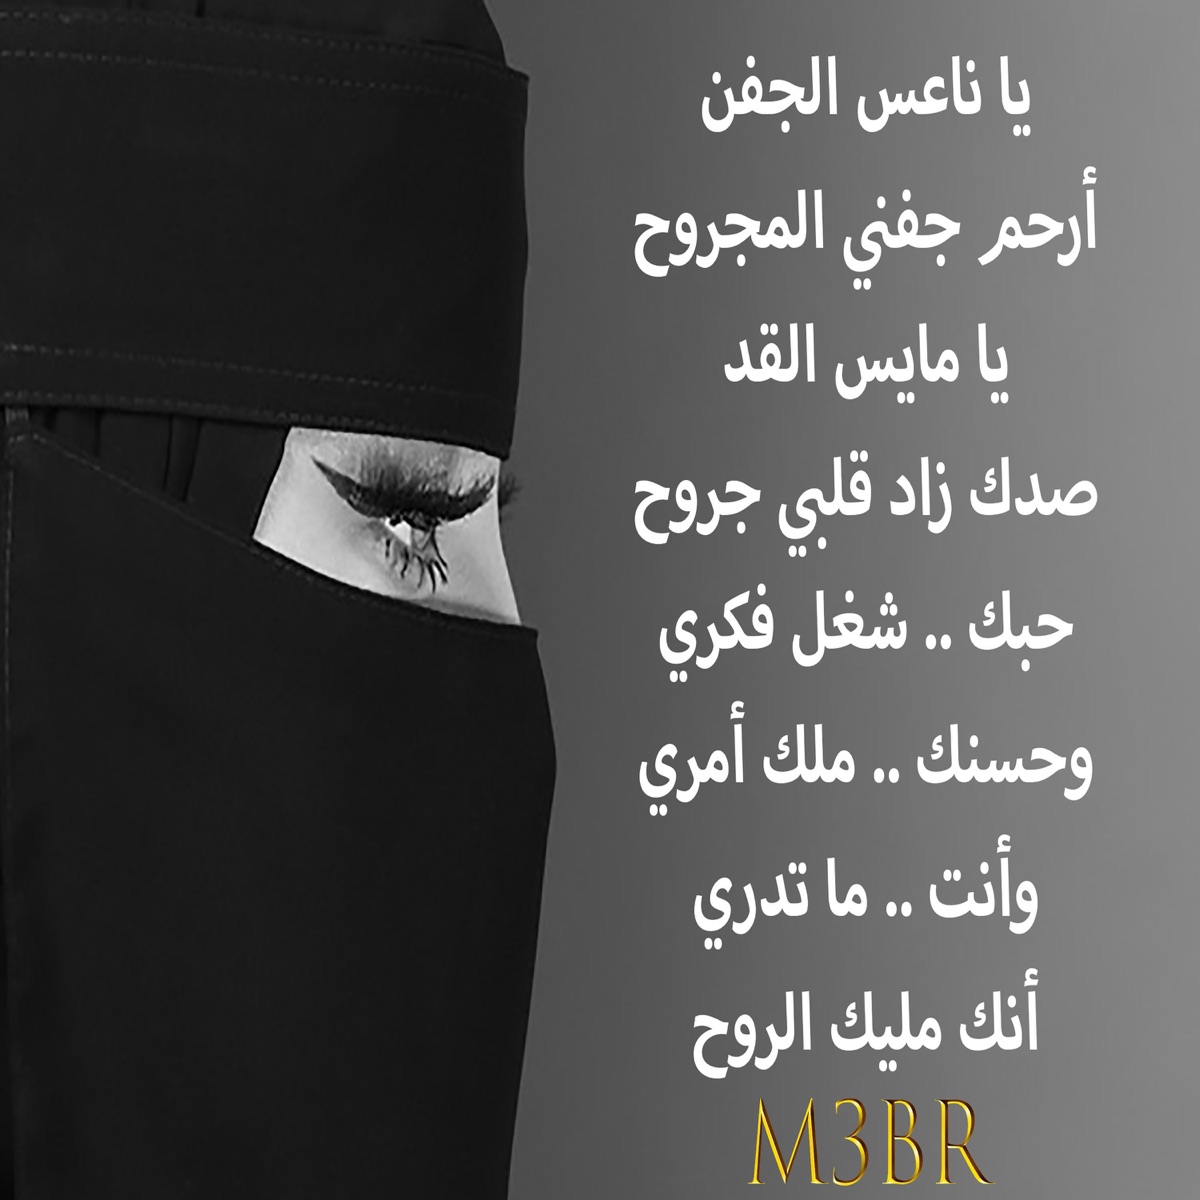 هلا باللي لفاني يا هلا به - Single - Album by sultan mabar - Apple Music